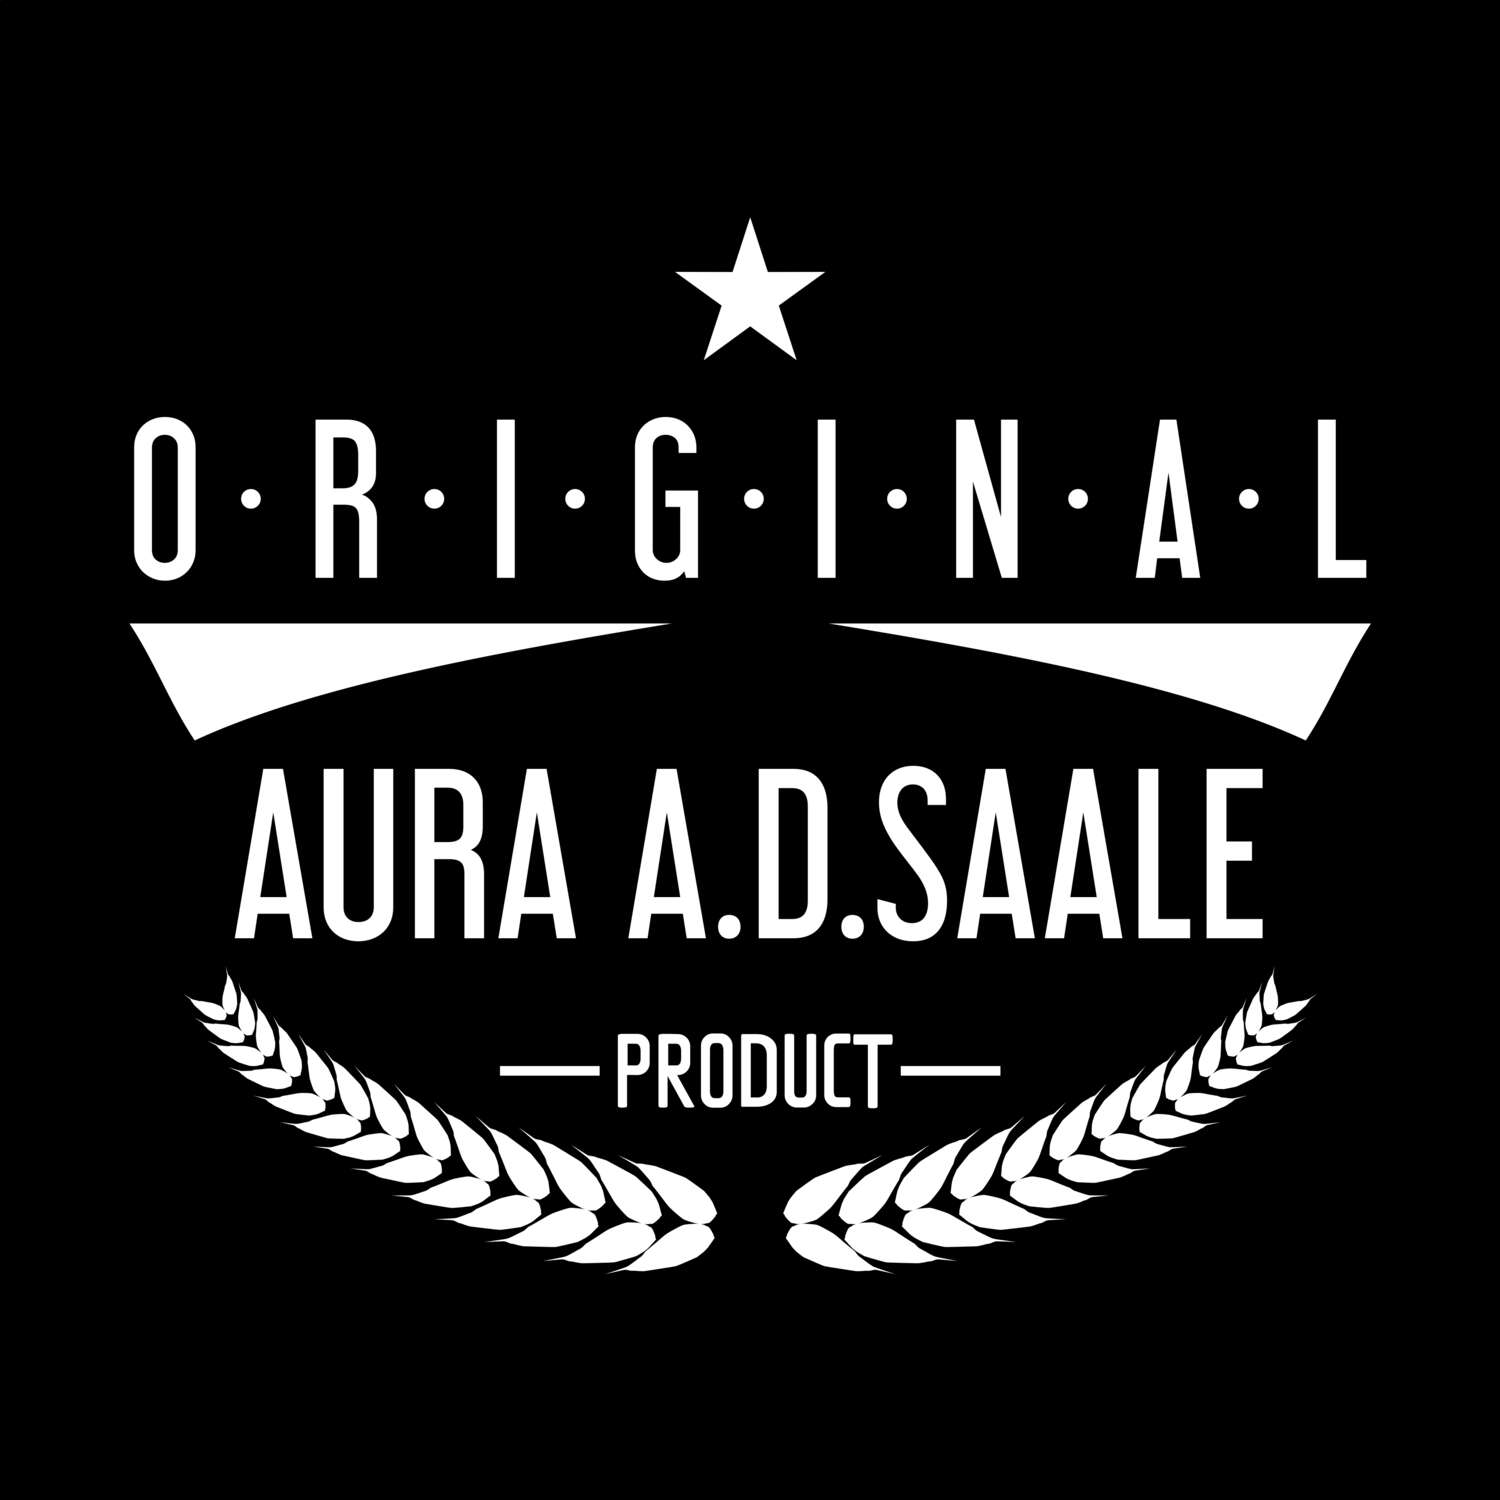 Aura a.d.Saale T-Shirt »Original Product«